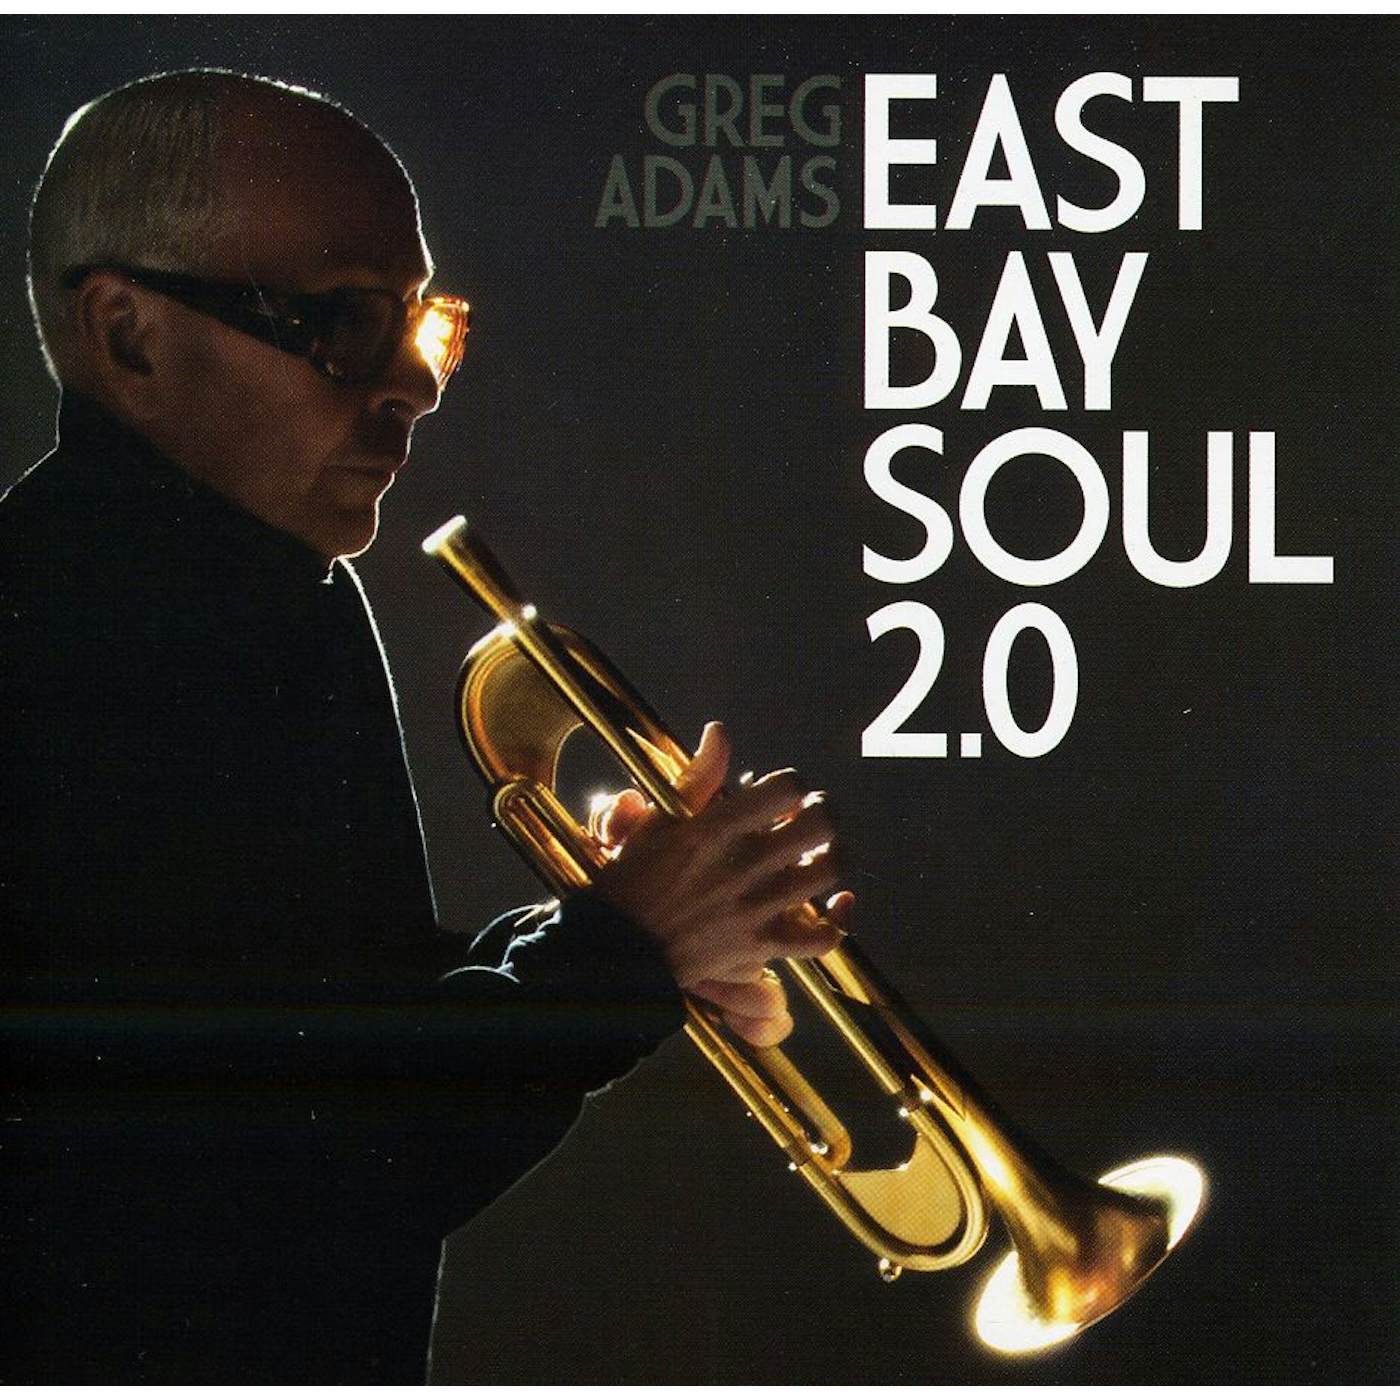 Greg Adams EAST BAY SOUL 2.0 CD